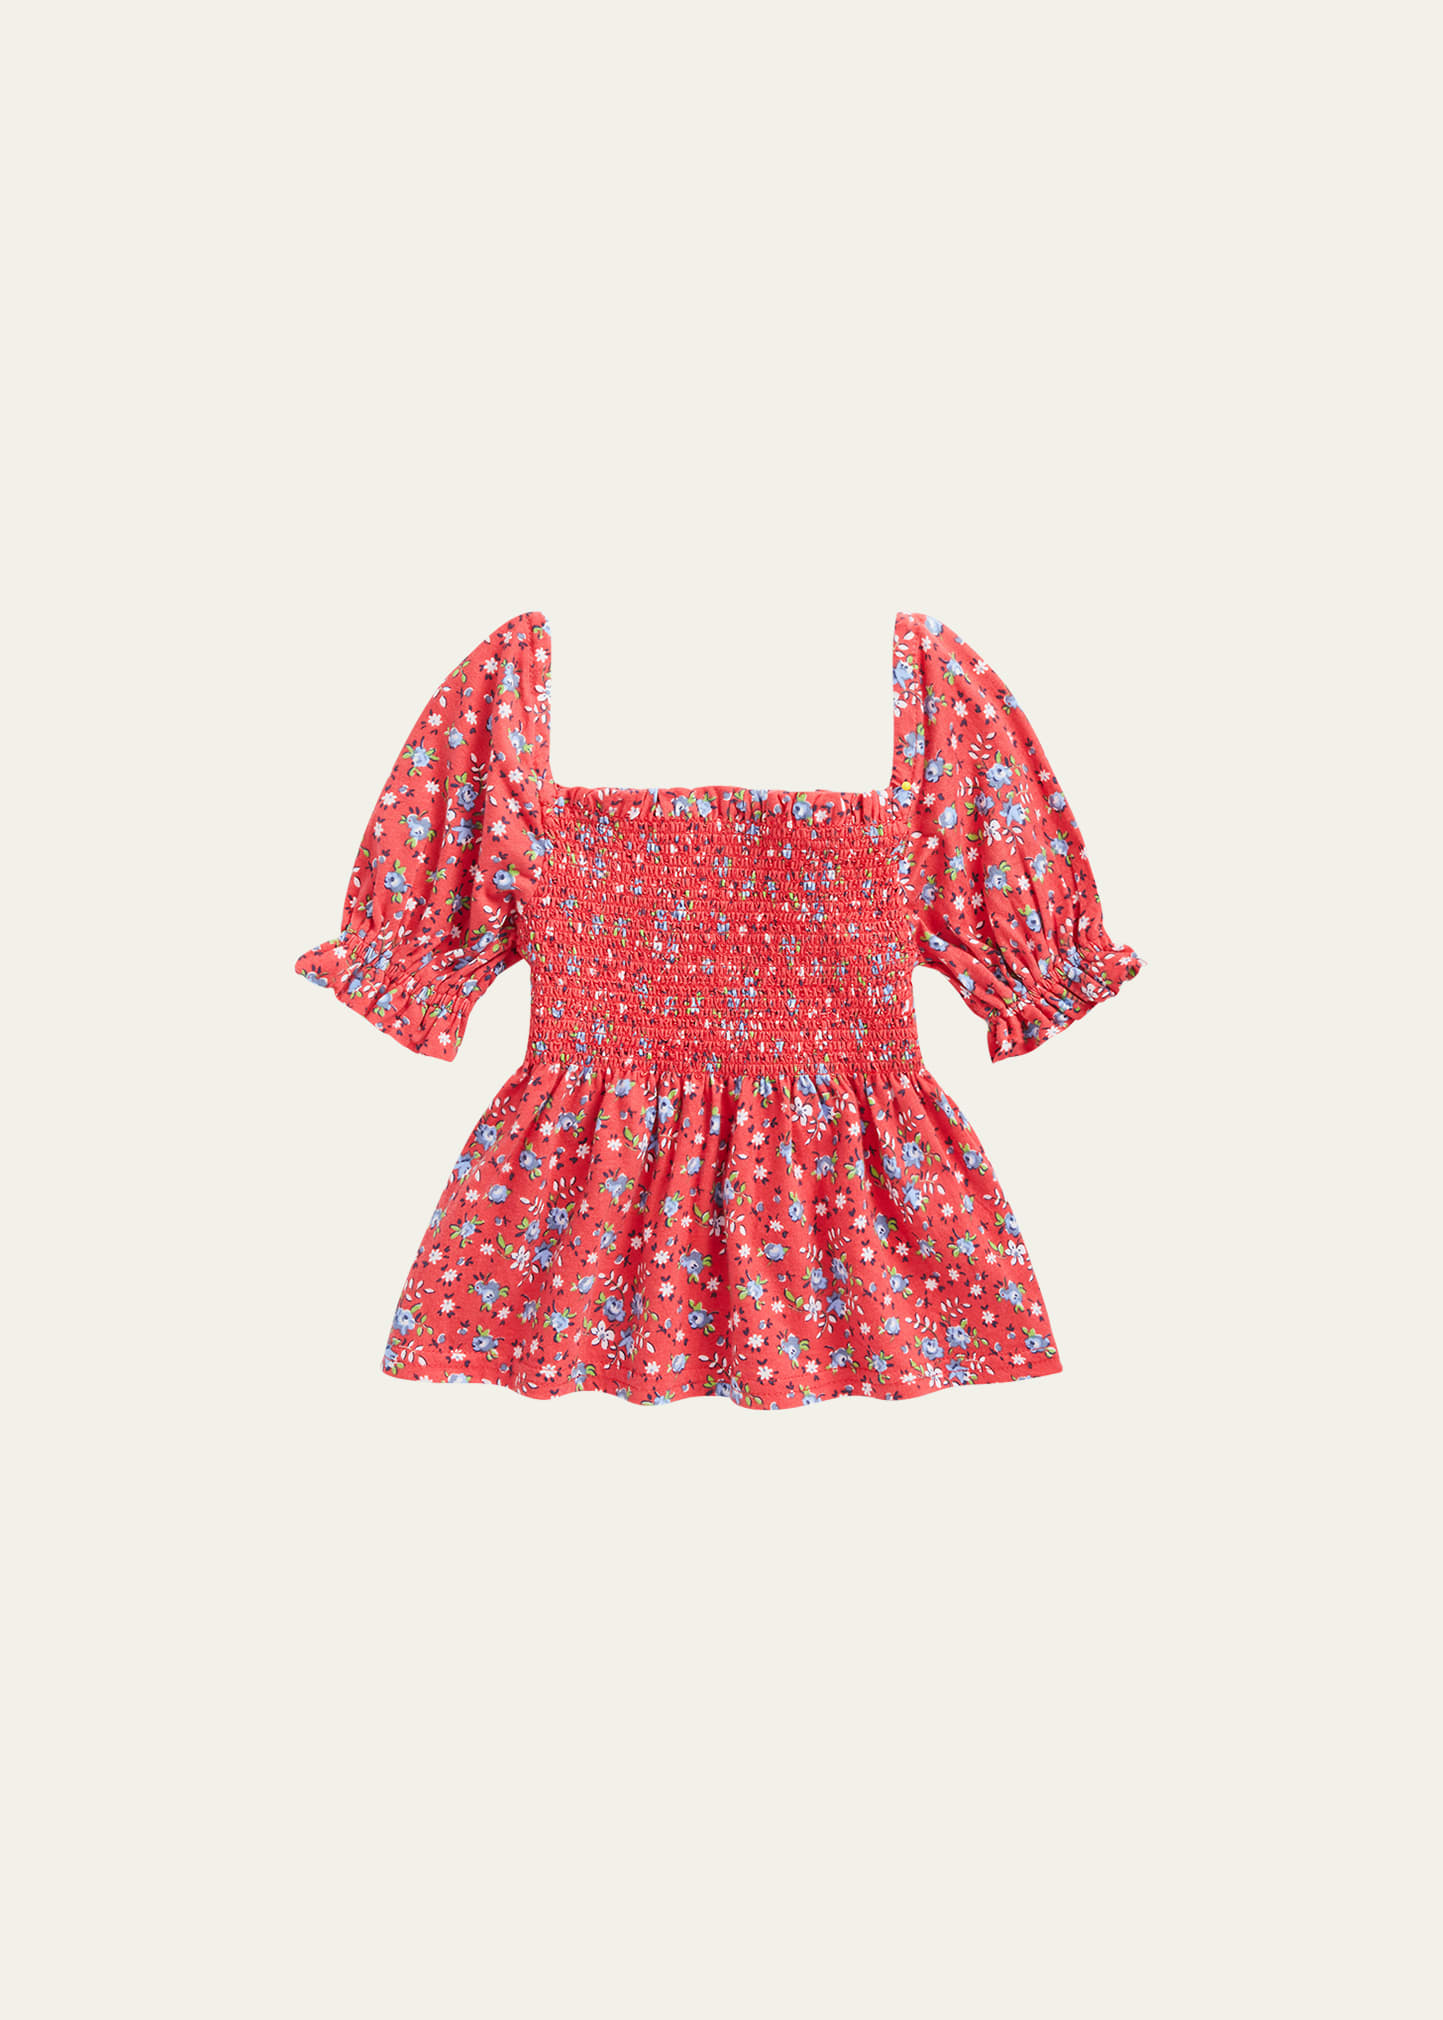 Ralph Lauren Childrenswear Girl's Smocked Floral-Print Top, Size 4-6X -  Bergdorf Goodman